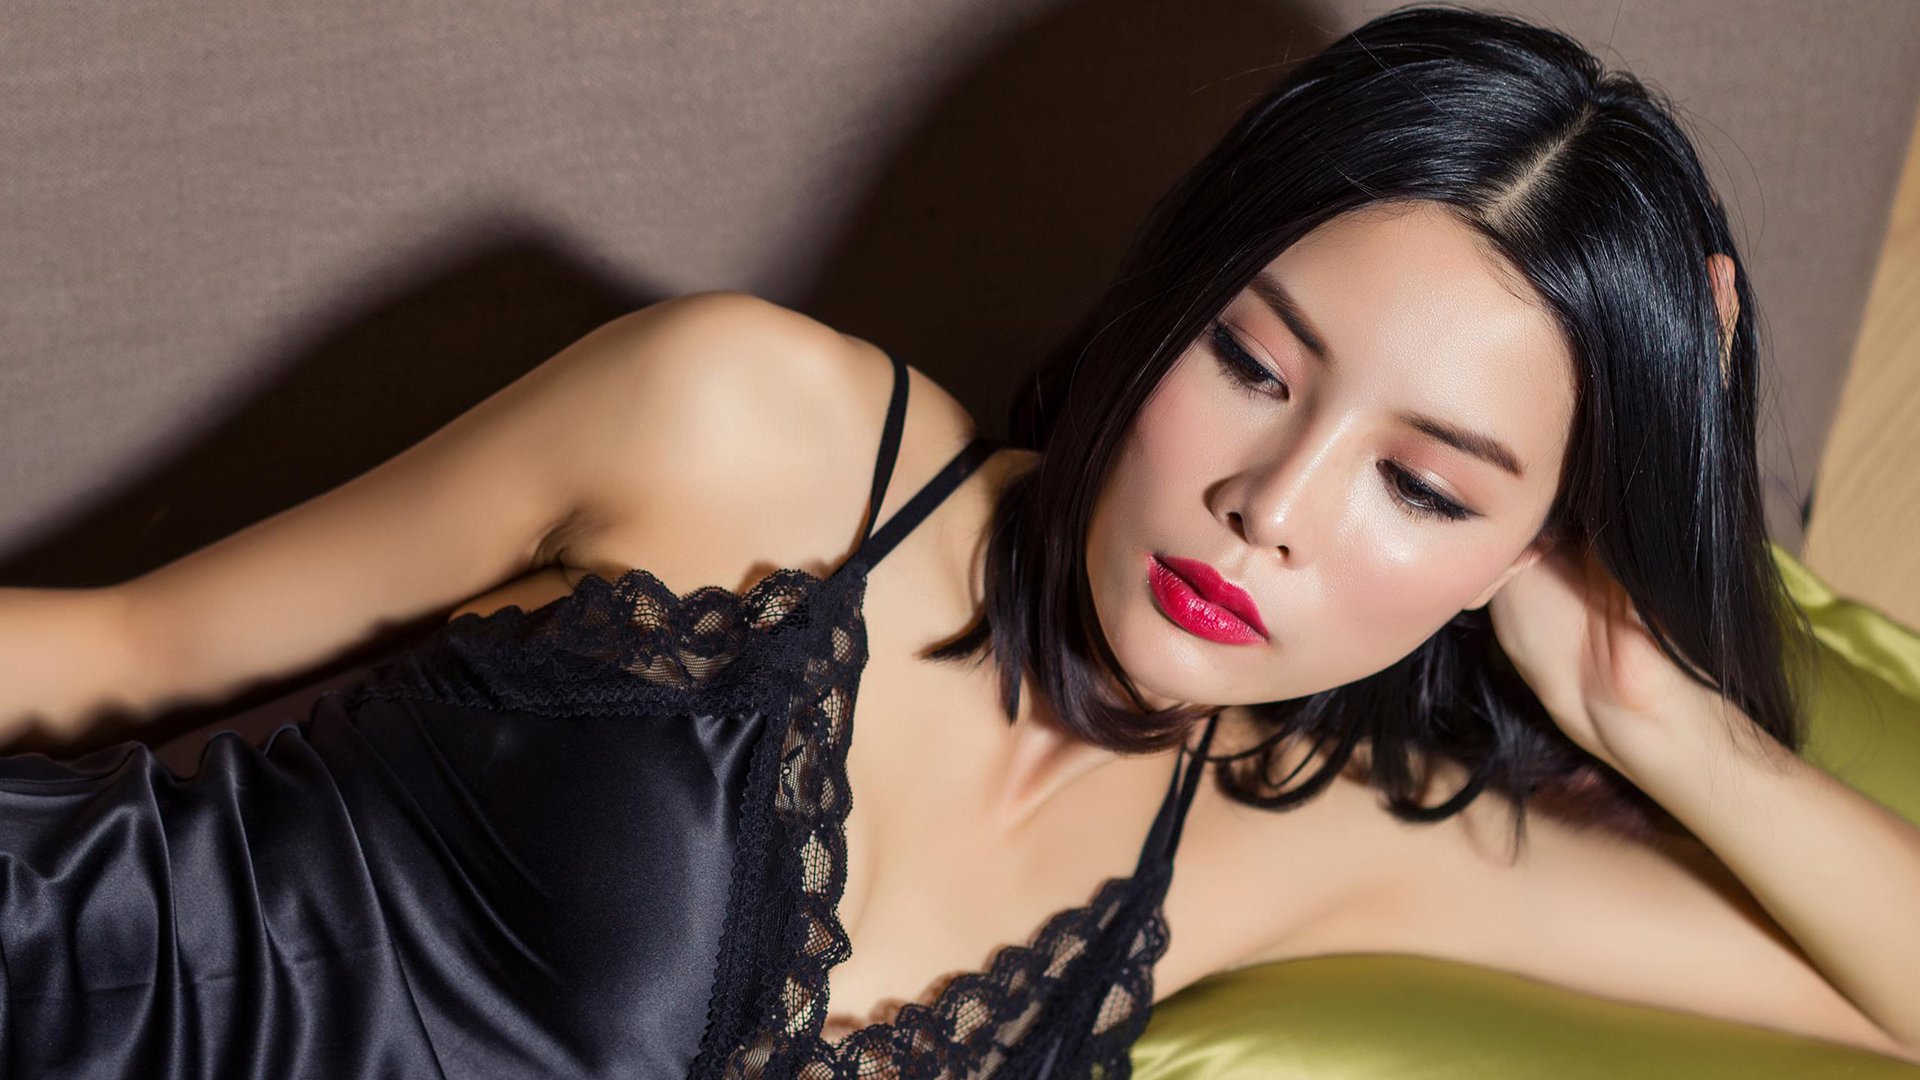 People 1920x1080 black hair dark hair Asian women satin silk lingerie sleepwear nightgown red lipstick lace Chinese Chinese model